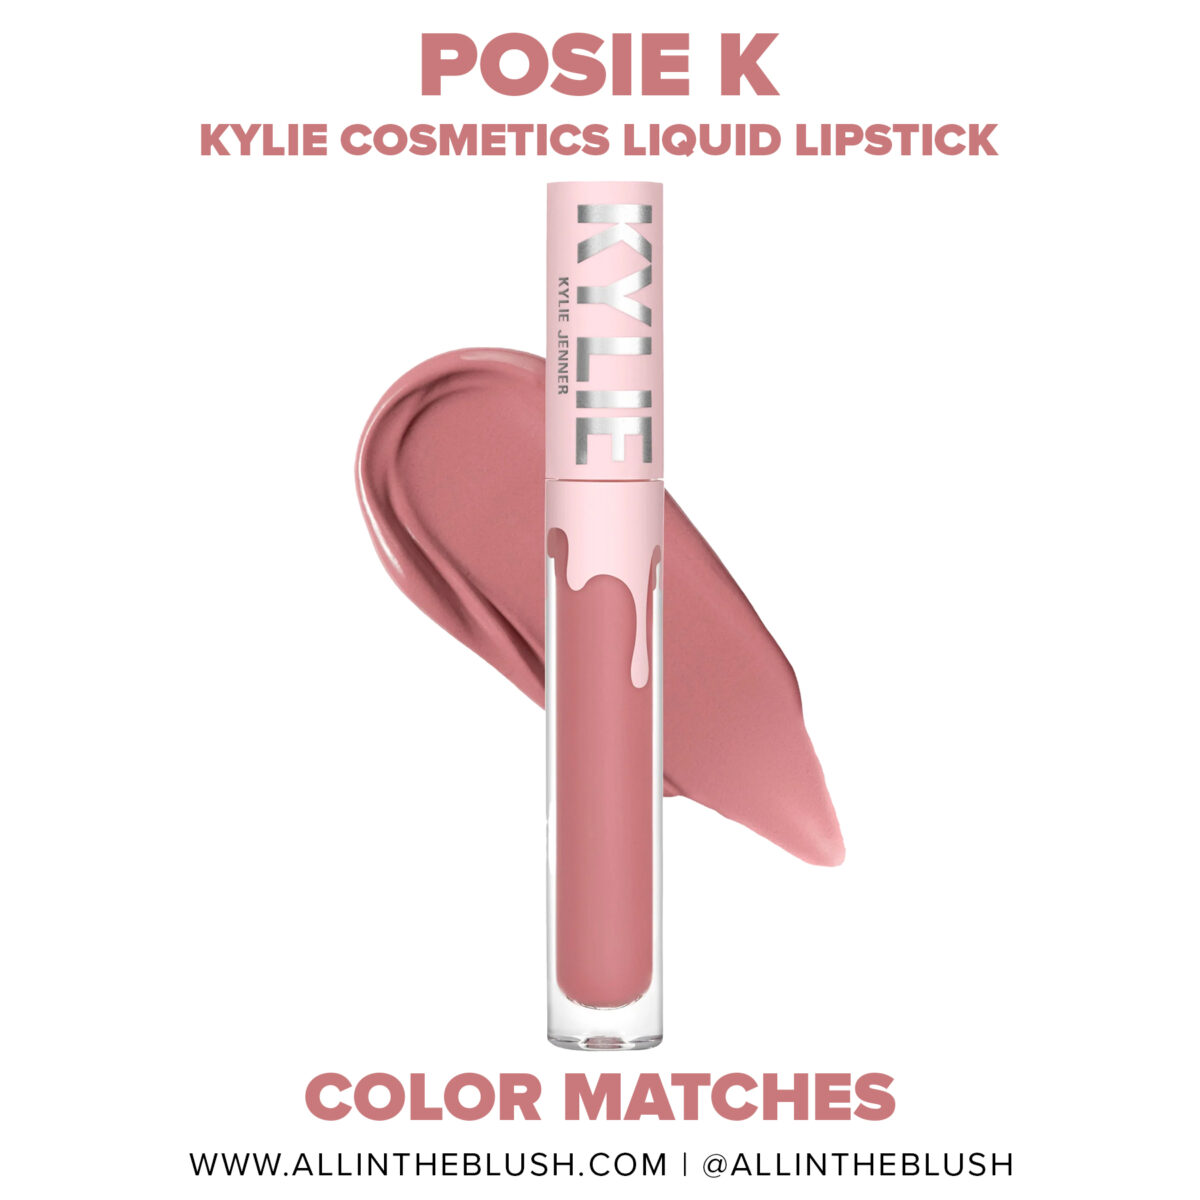 Kylie Cosmetics Posie K Reformulated Liquid Lipstick Color Matches